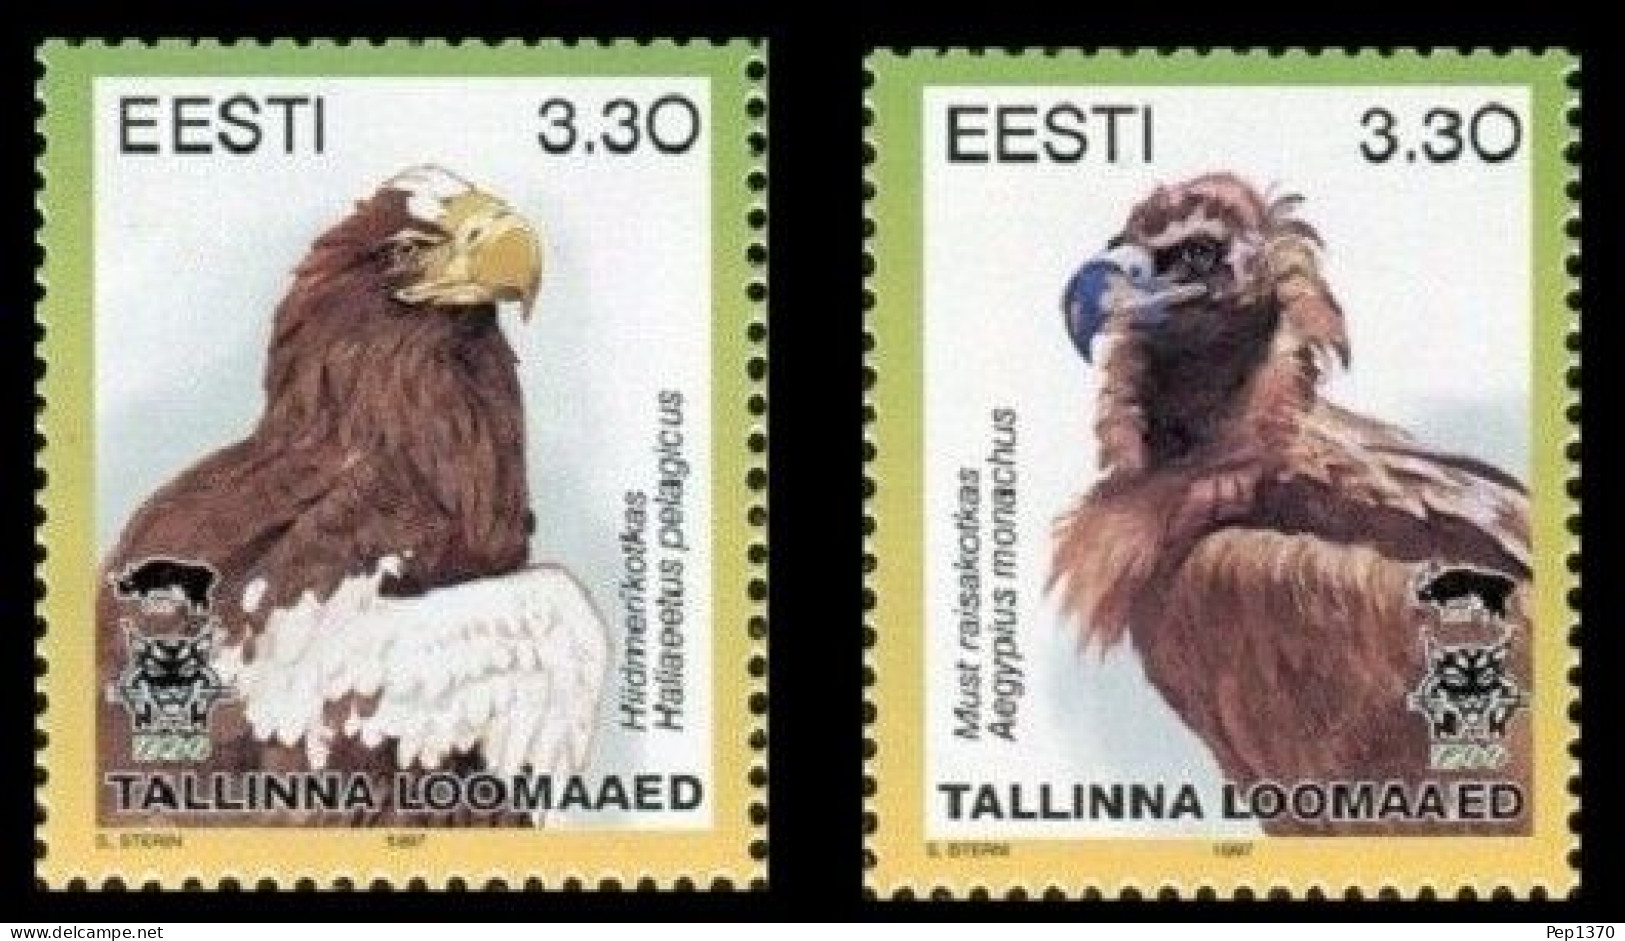 ESTONIA 1997 - ESTONIE - EESTI - AVES - PAJAROS - YVERT PROCEDEN DE HB-11** - Estland